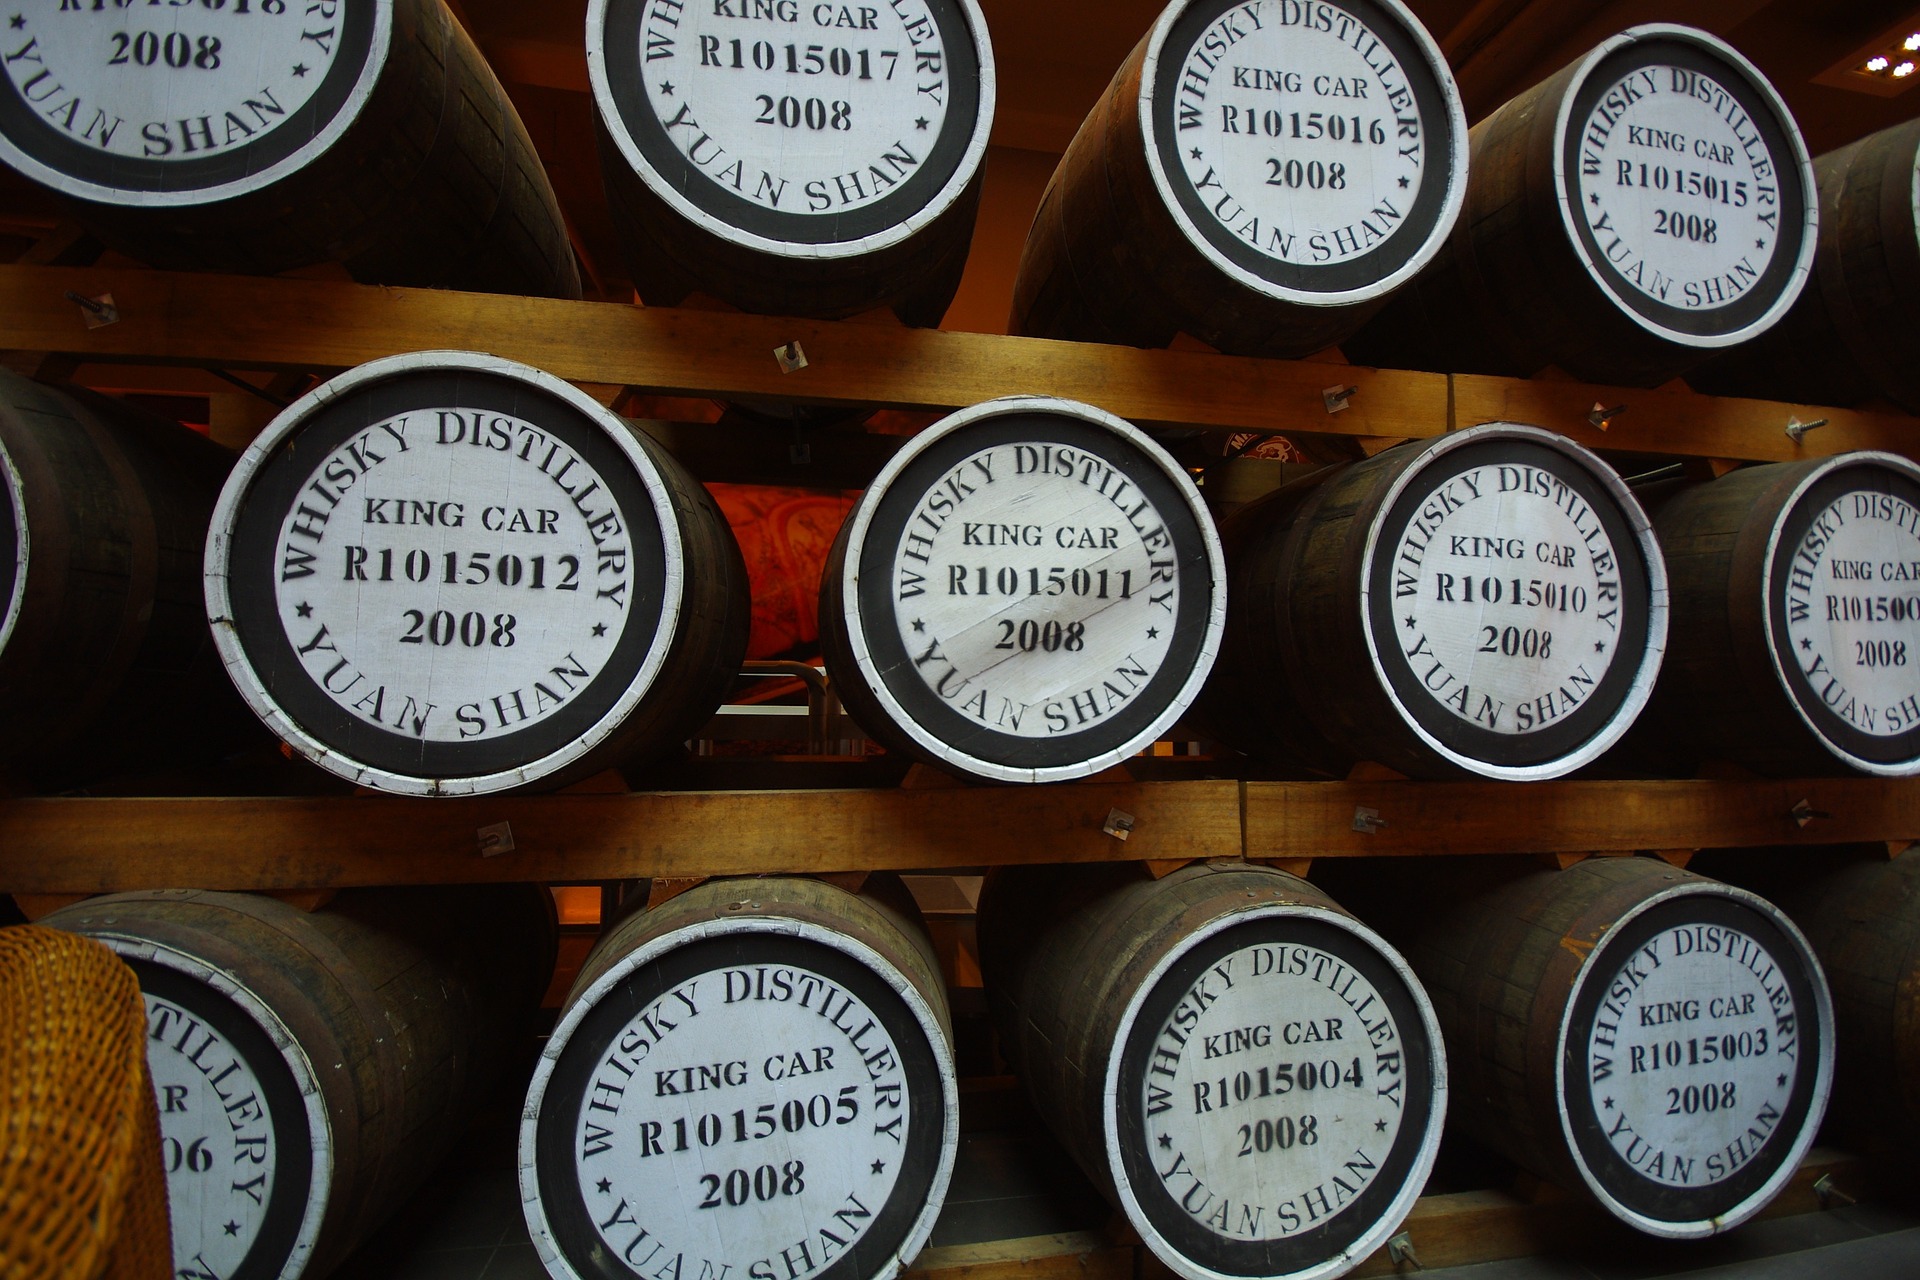 Whisky Yushan Signature Bourbon Cask  NANTOU DISTILLERY